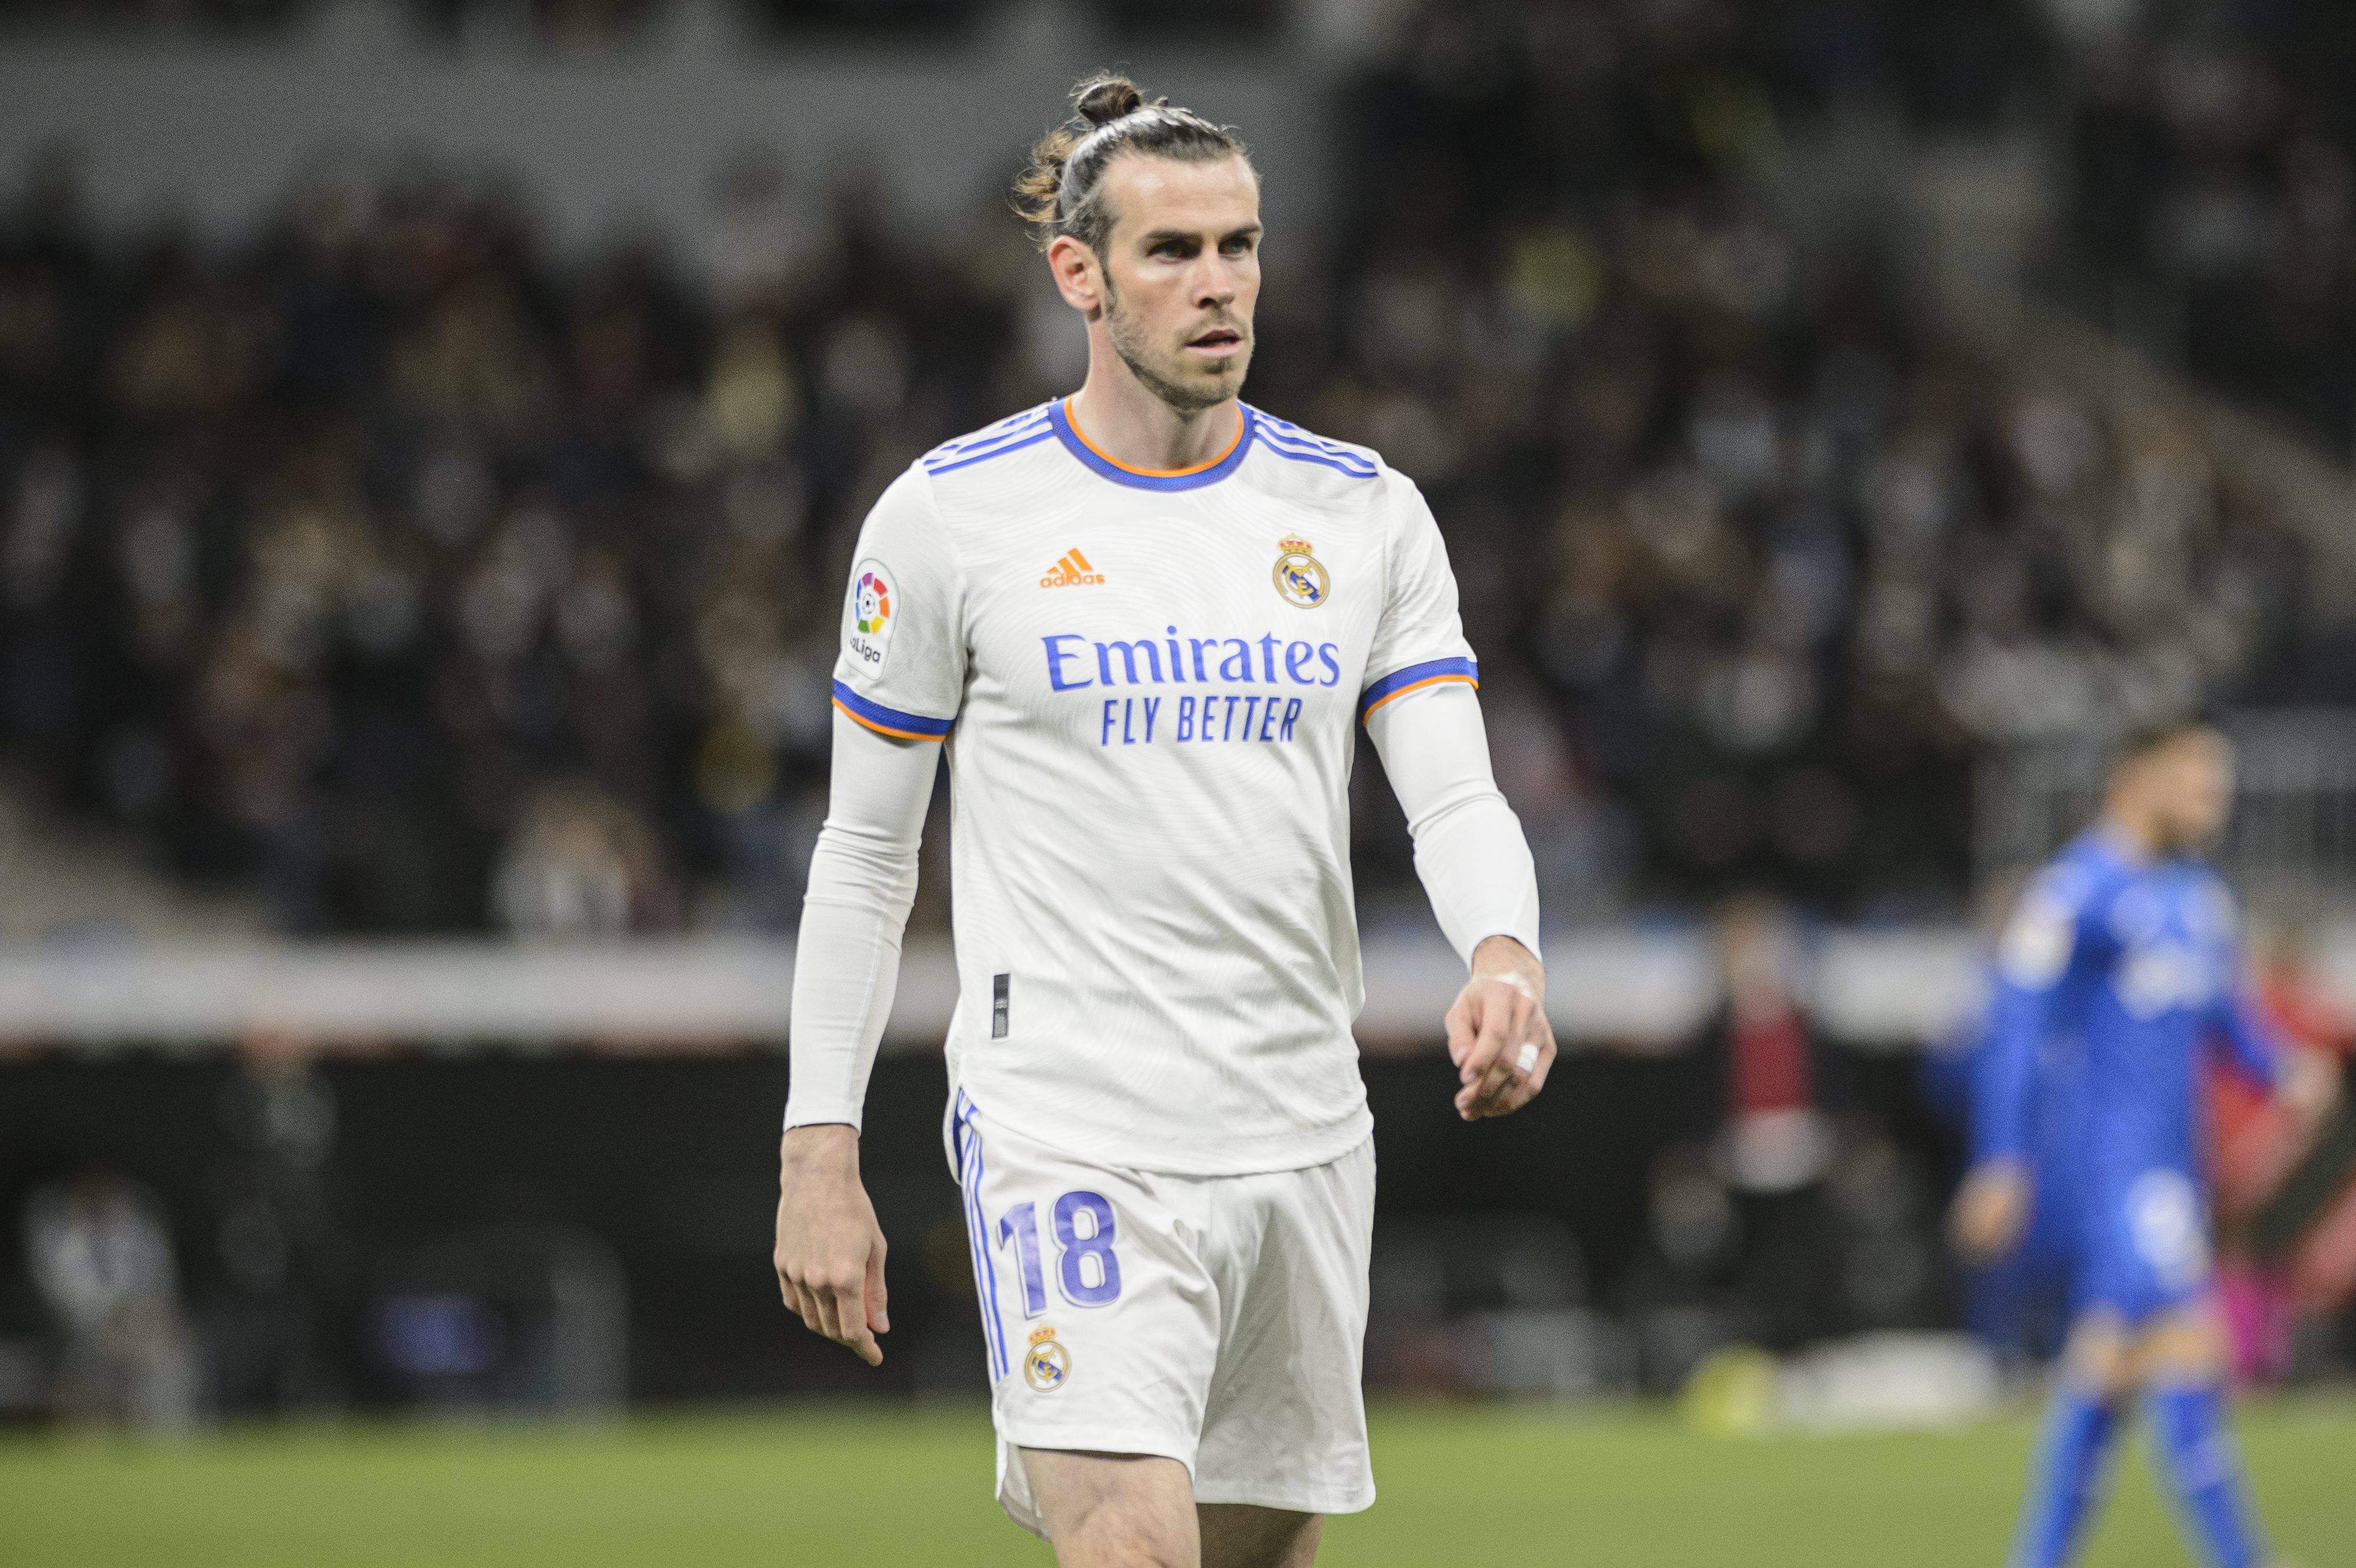 Real Madrid Haïti RMH - OFFICIEL ! Gareth Bale s'engage jusqu'en